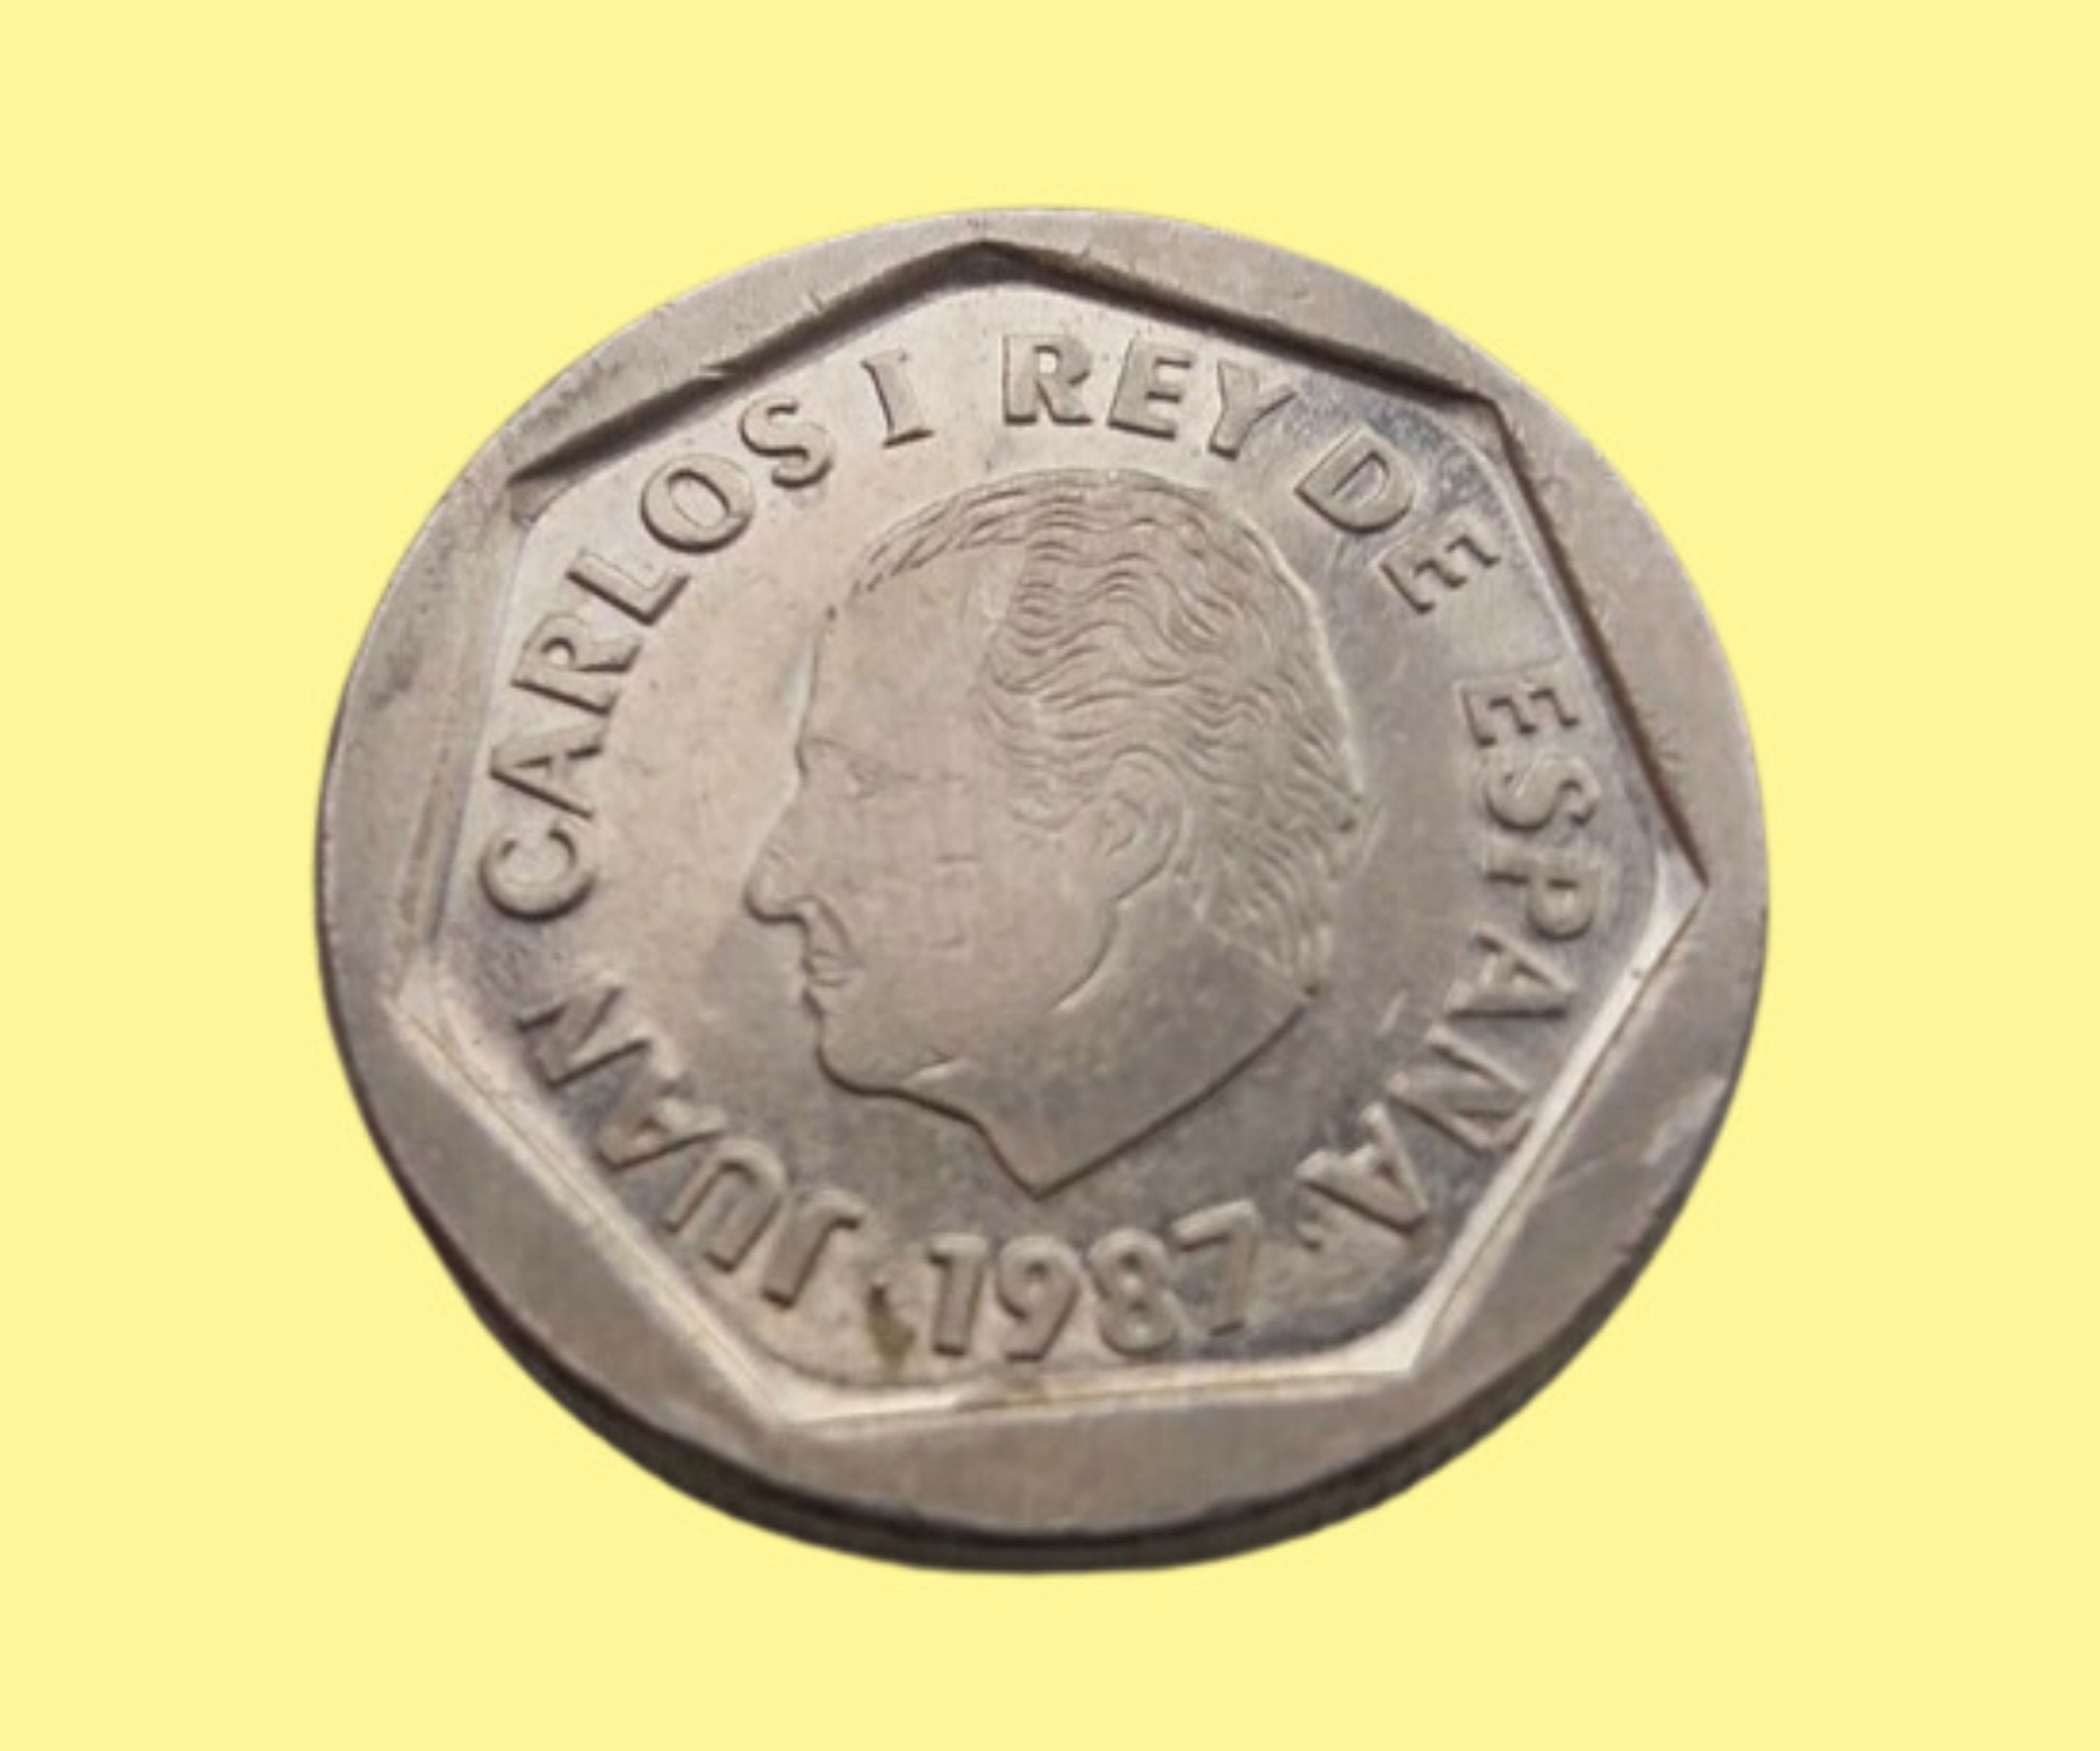 200 pesetas de 1987